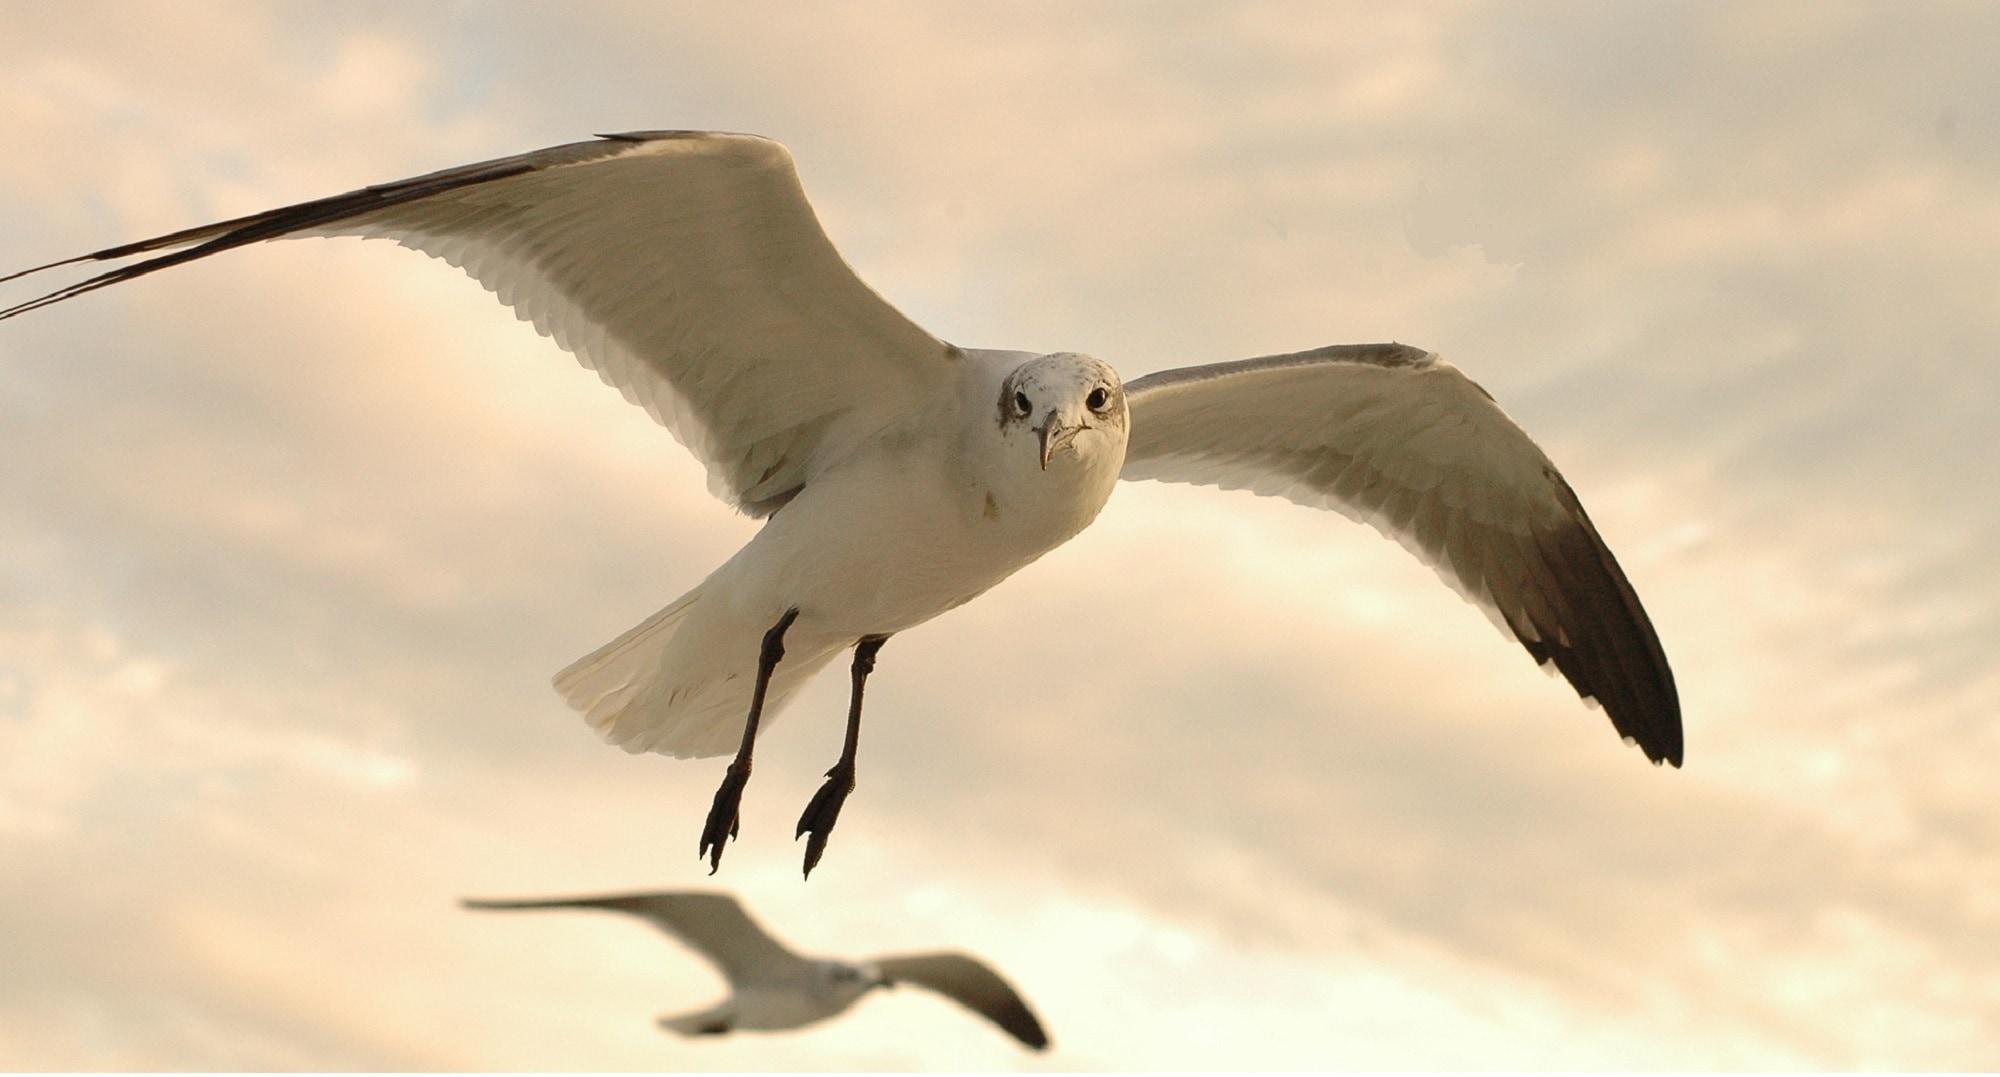 Seagulls, Nature, Wildlife, Flying, animal wildlife, bird